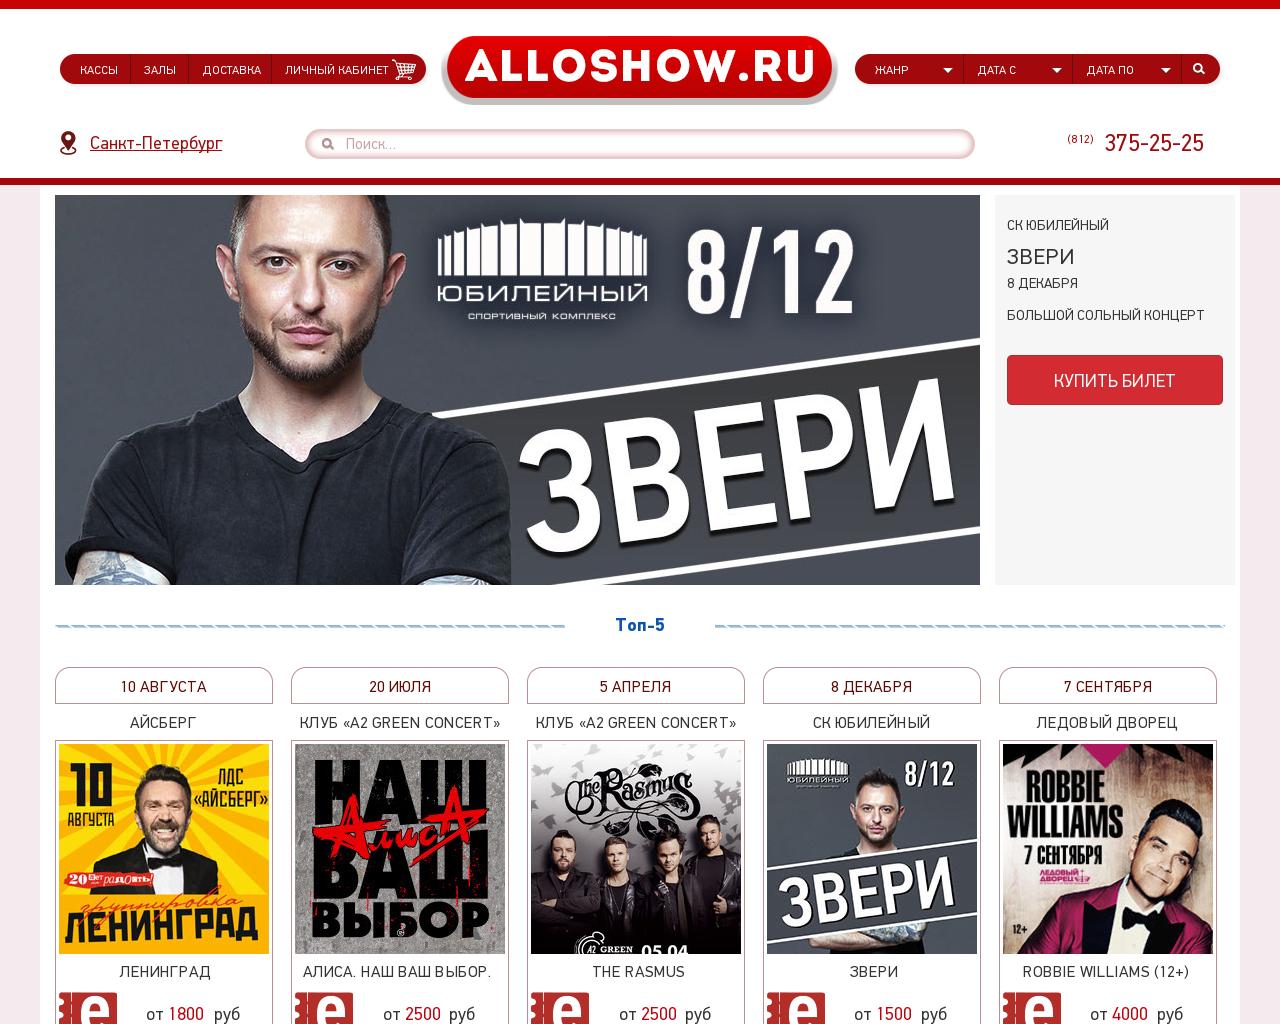 Изображение сайта alloshow.ru в разрешении 1280x1024